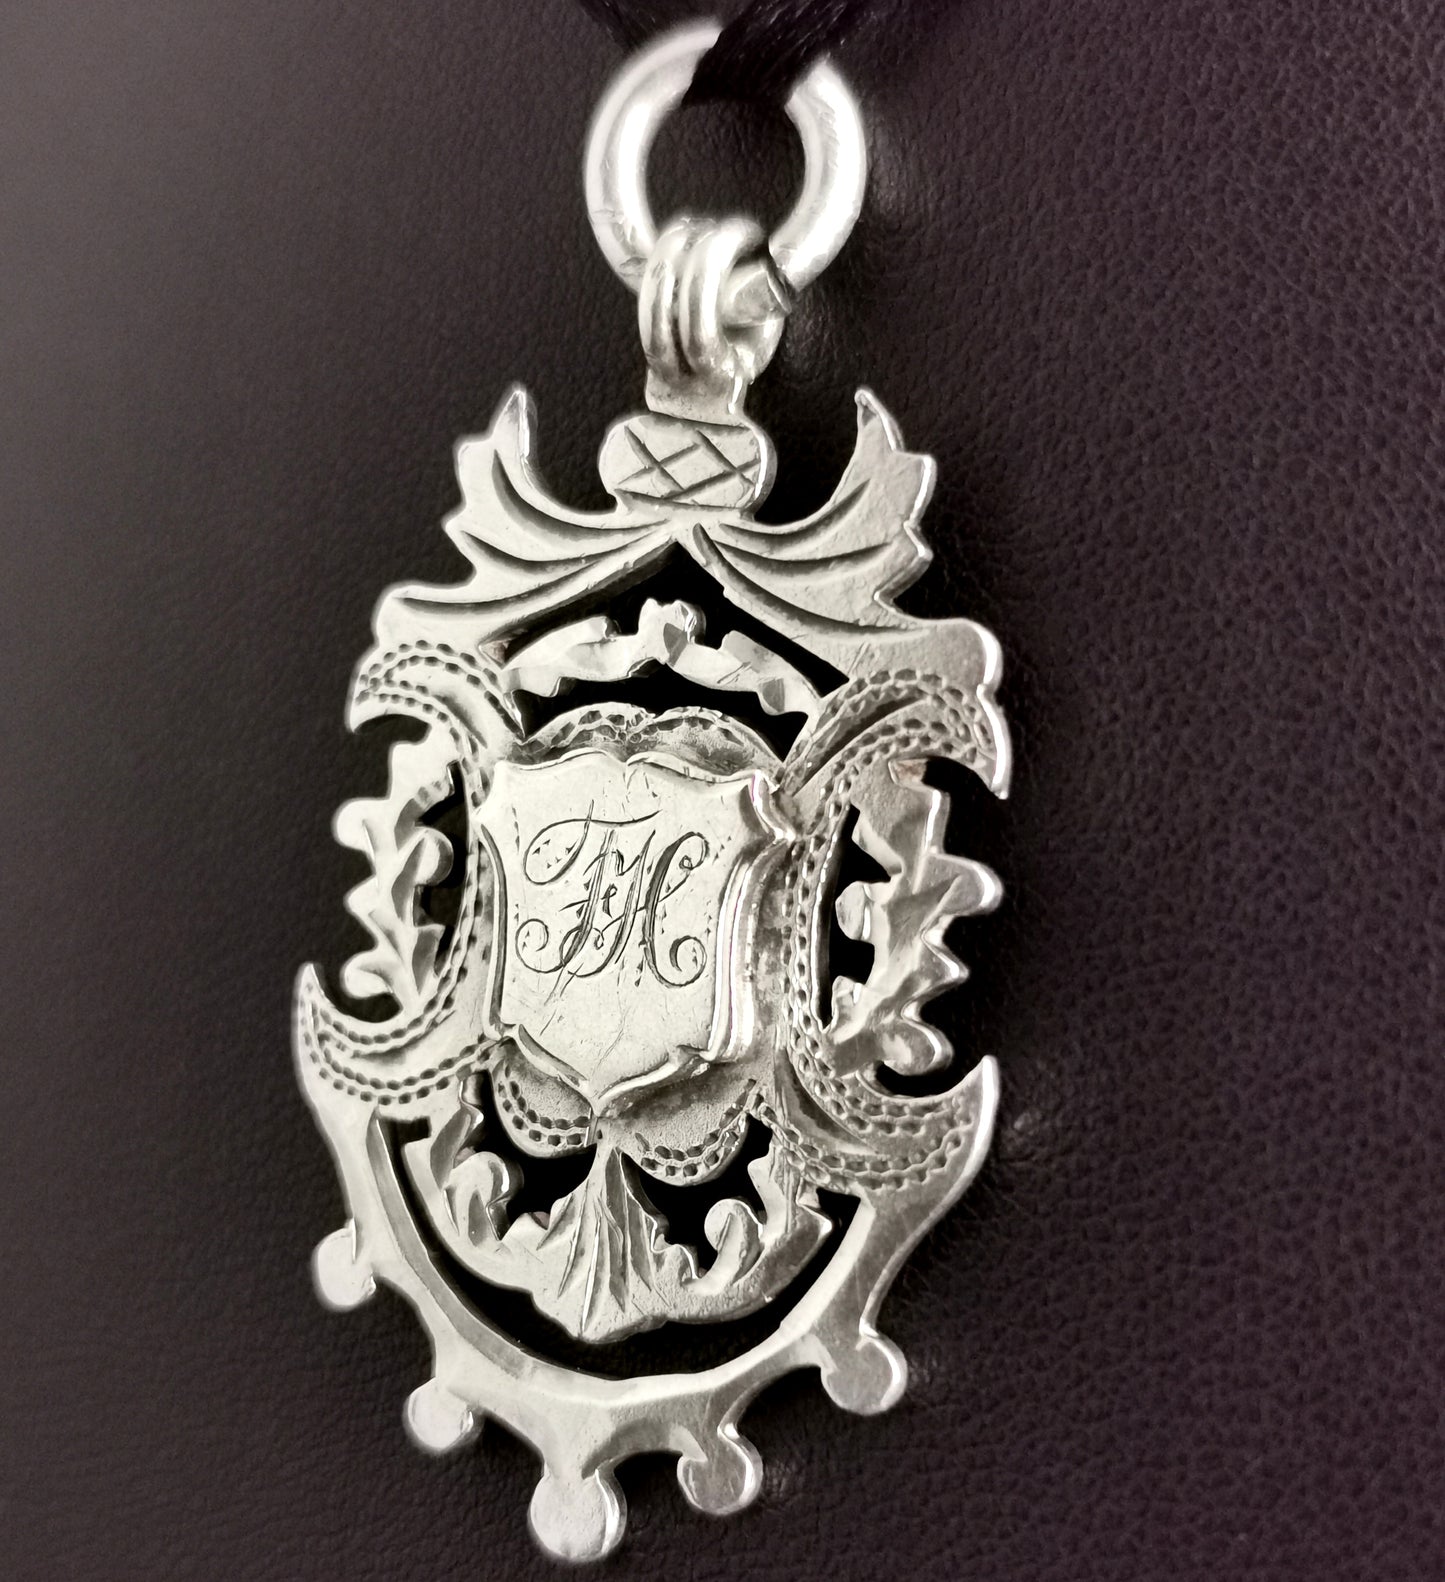 Antique Victorian silver Watch fob pendant, Gymnastics